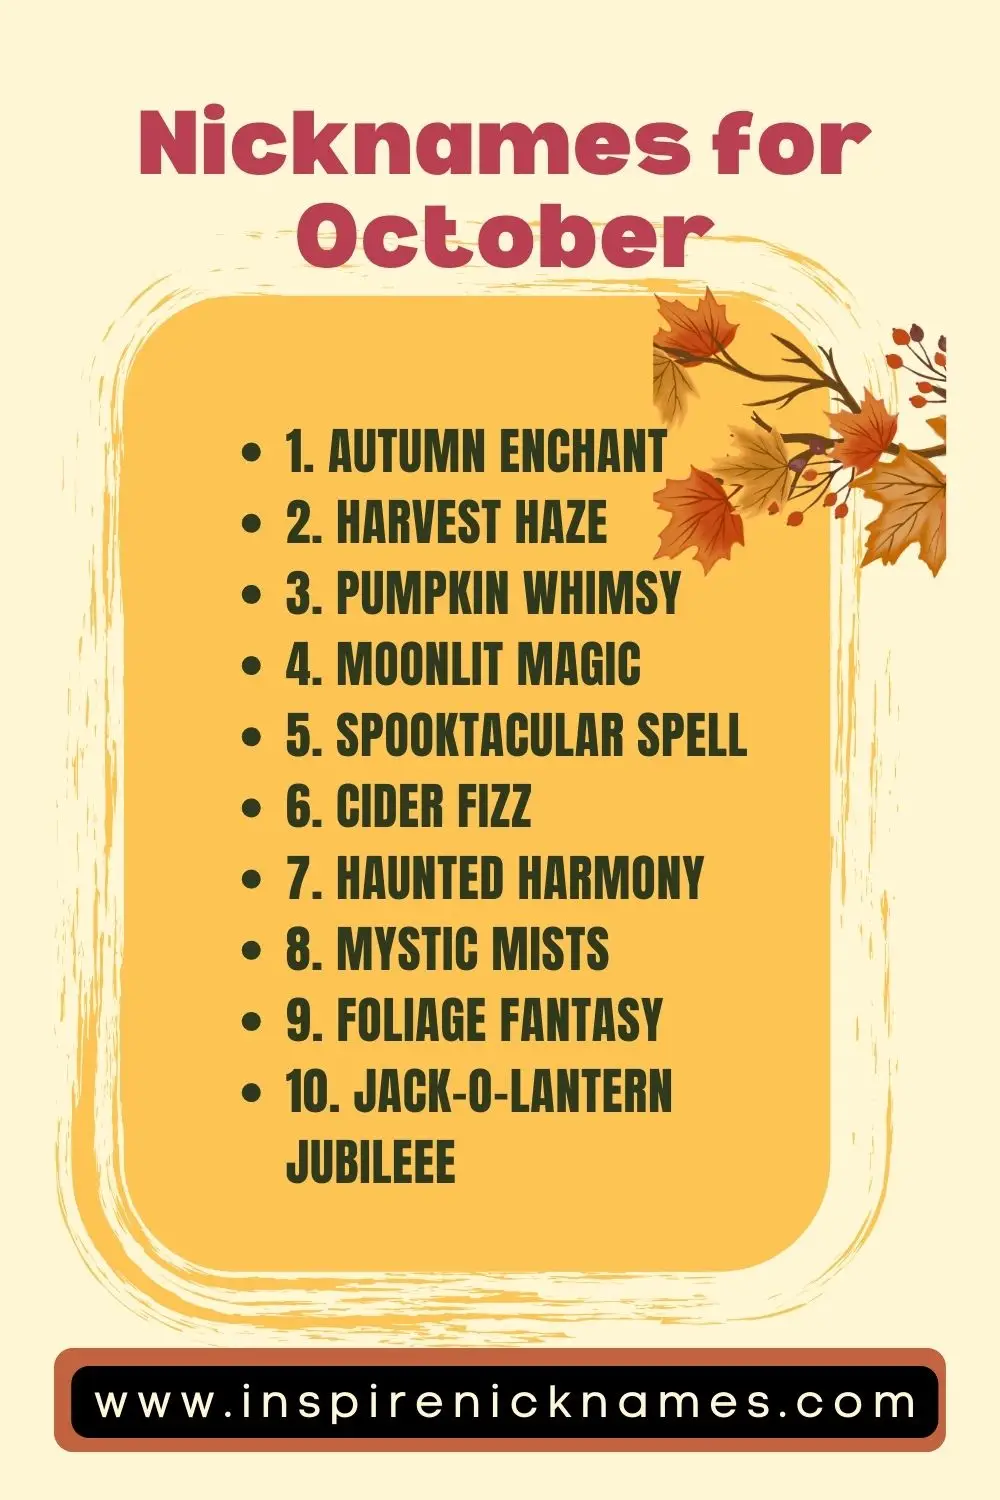 nicknames for October lost ideas